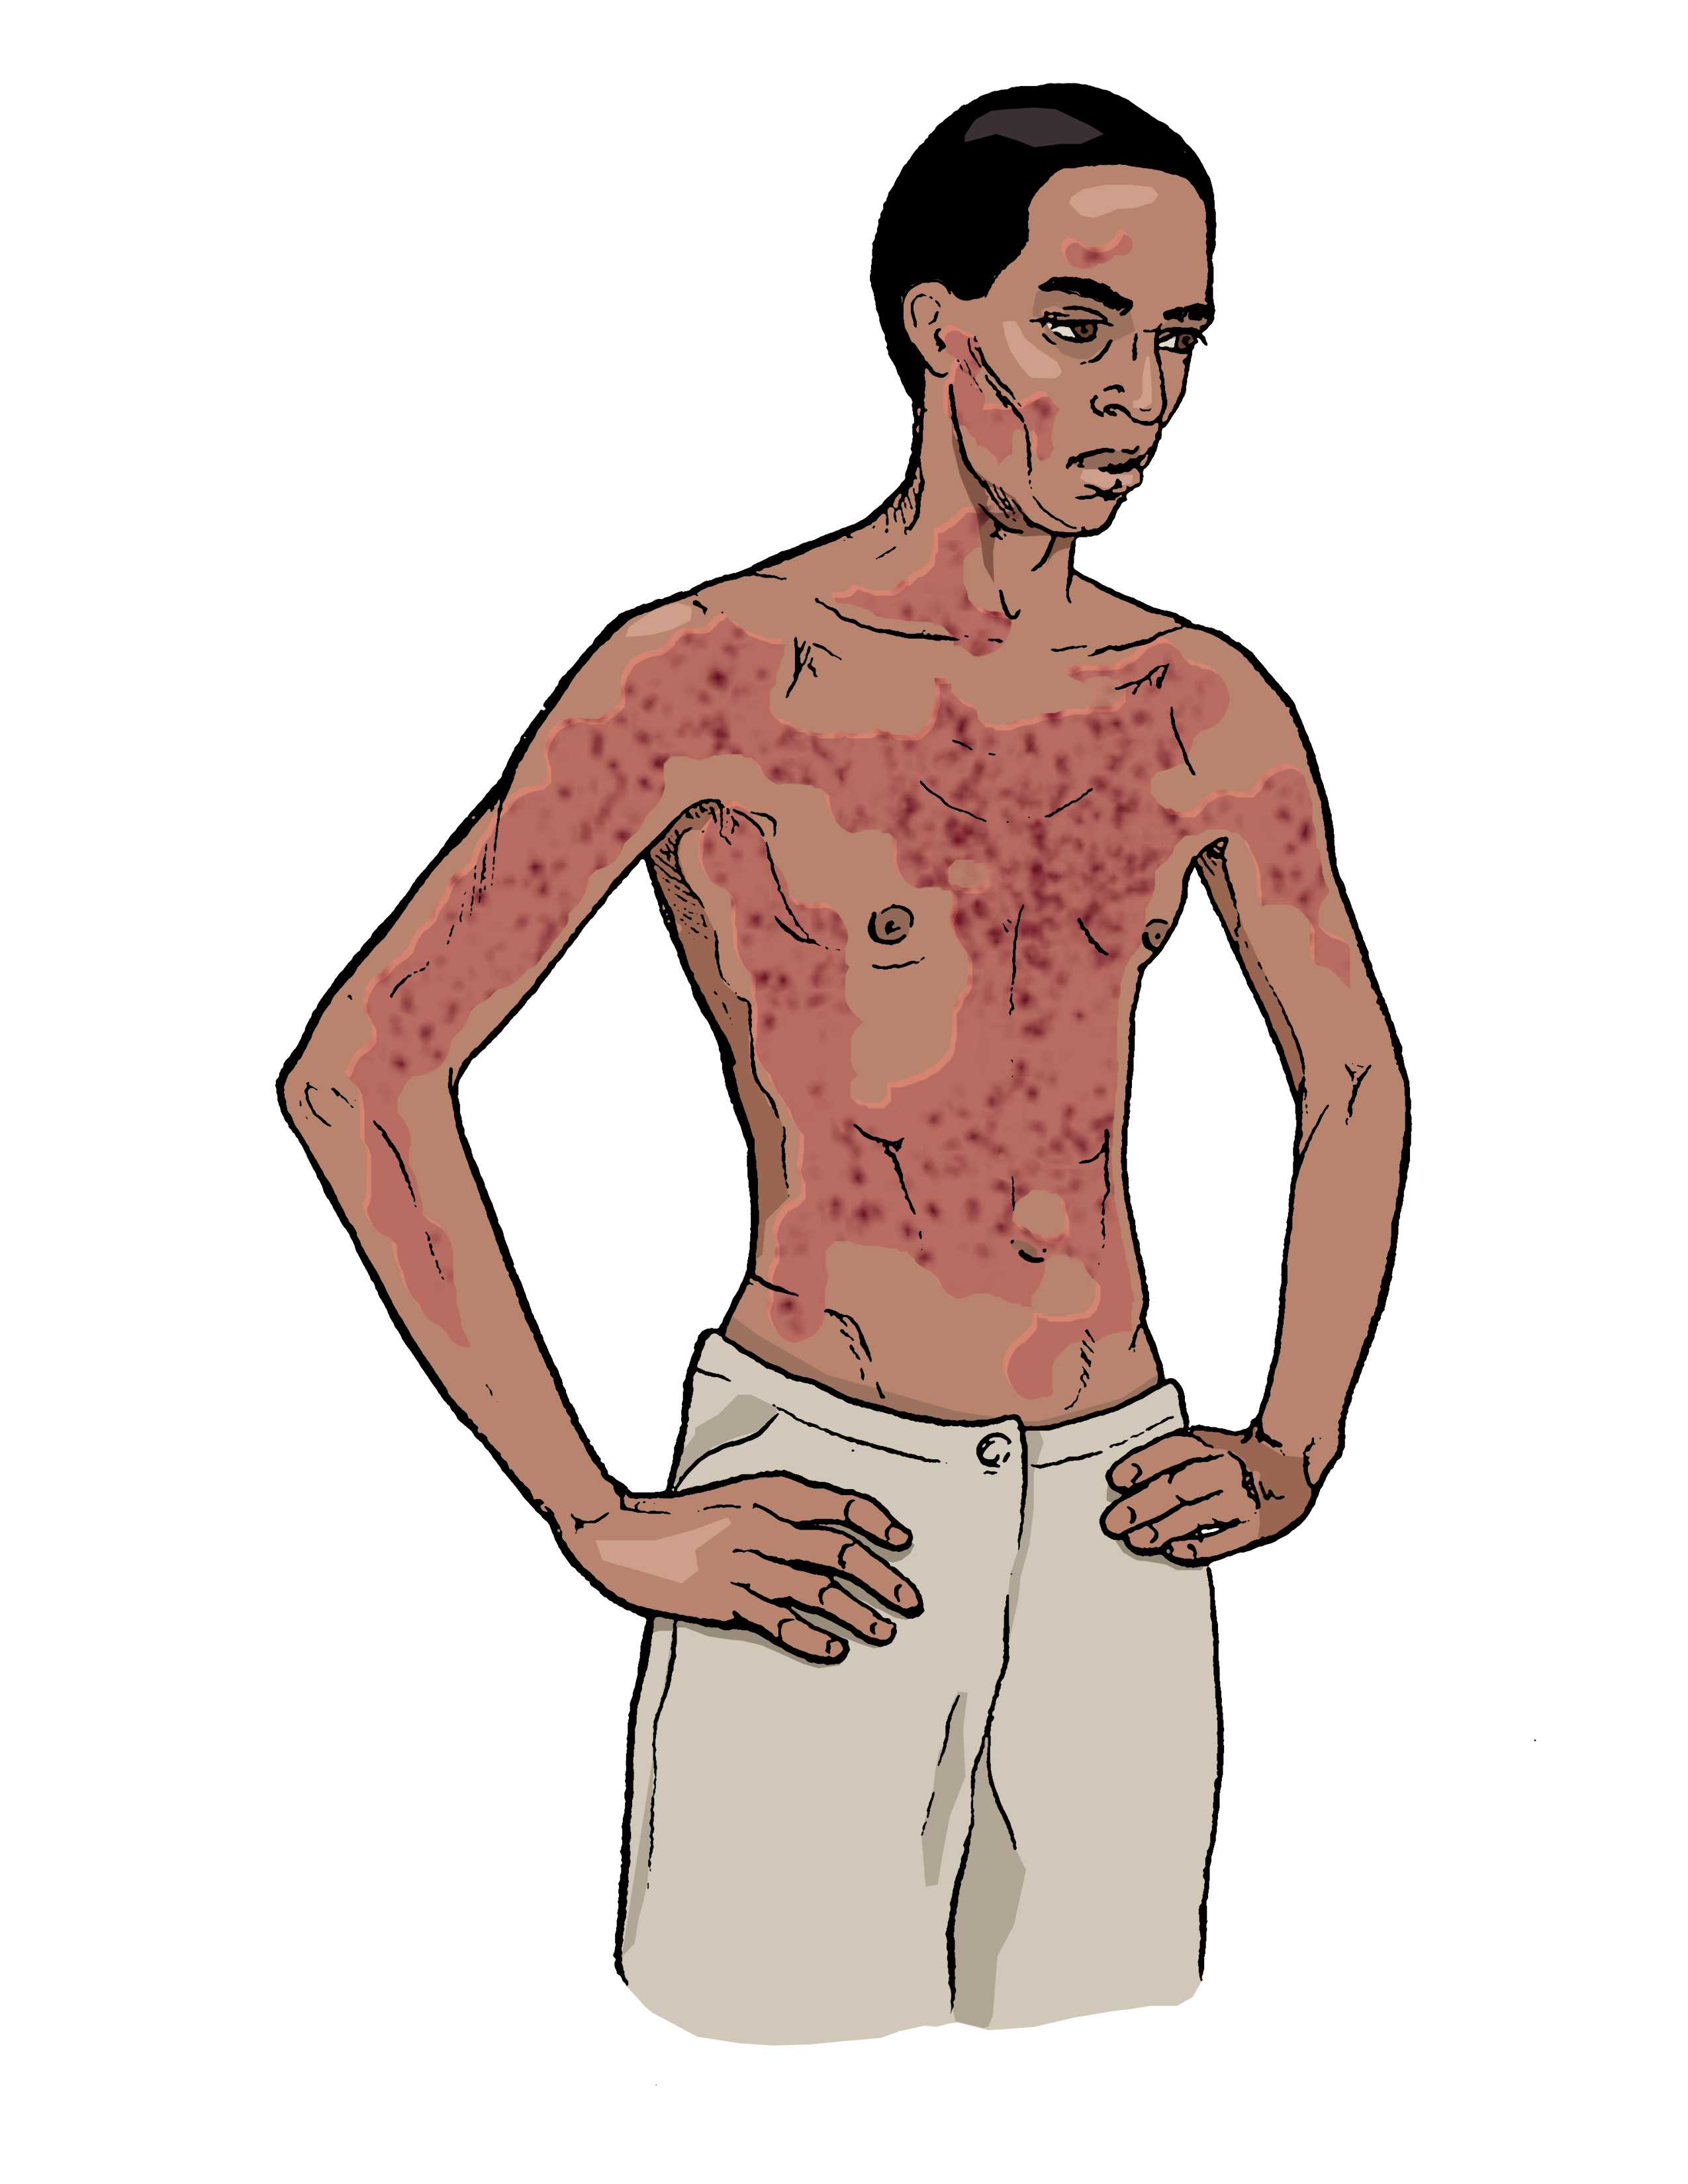 Ebola symptom: Skin rash